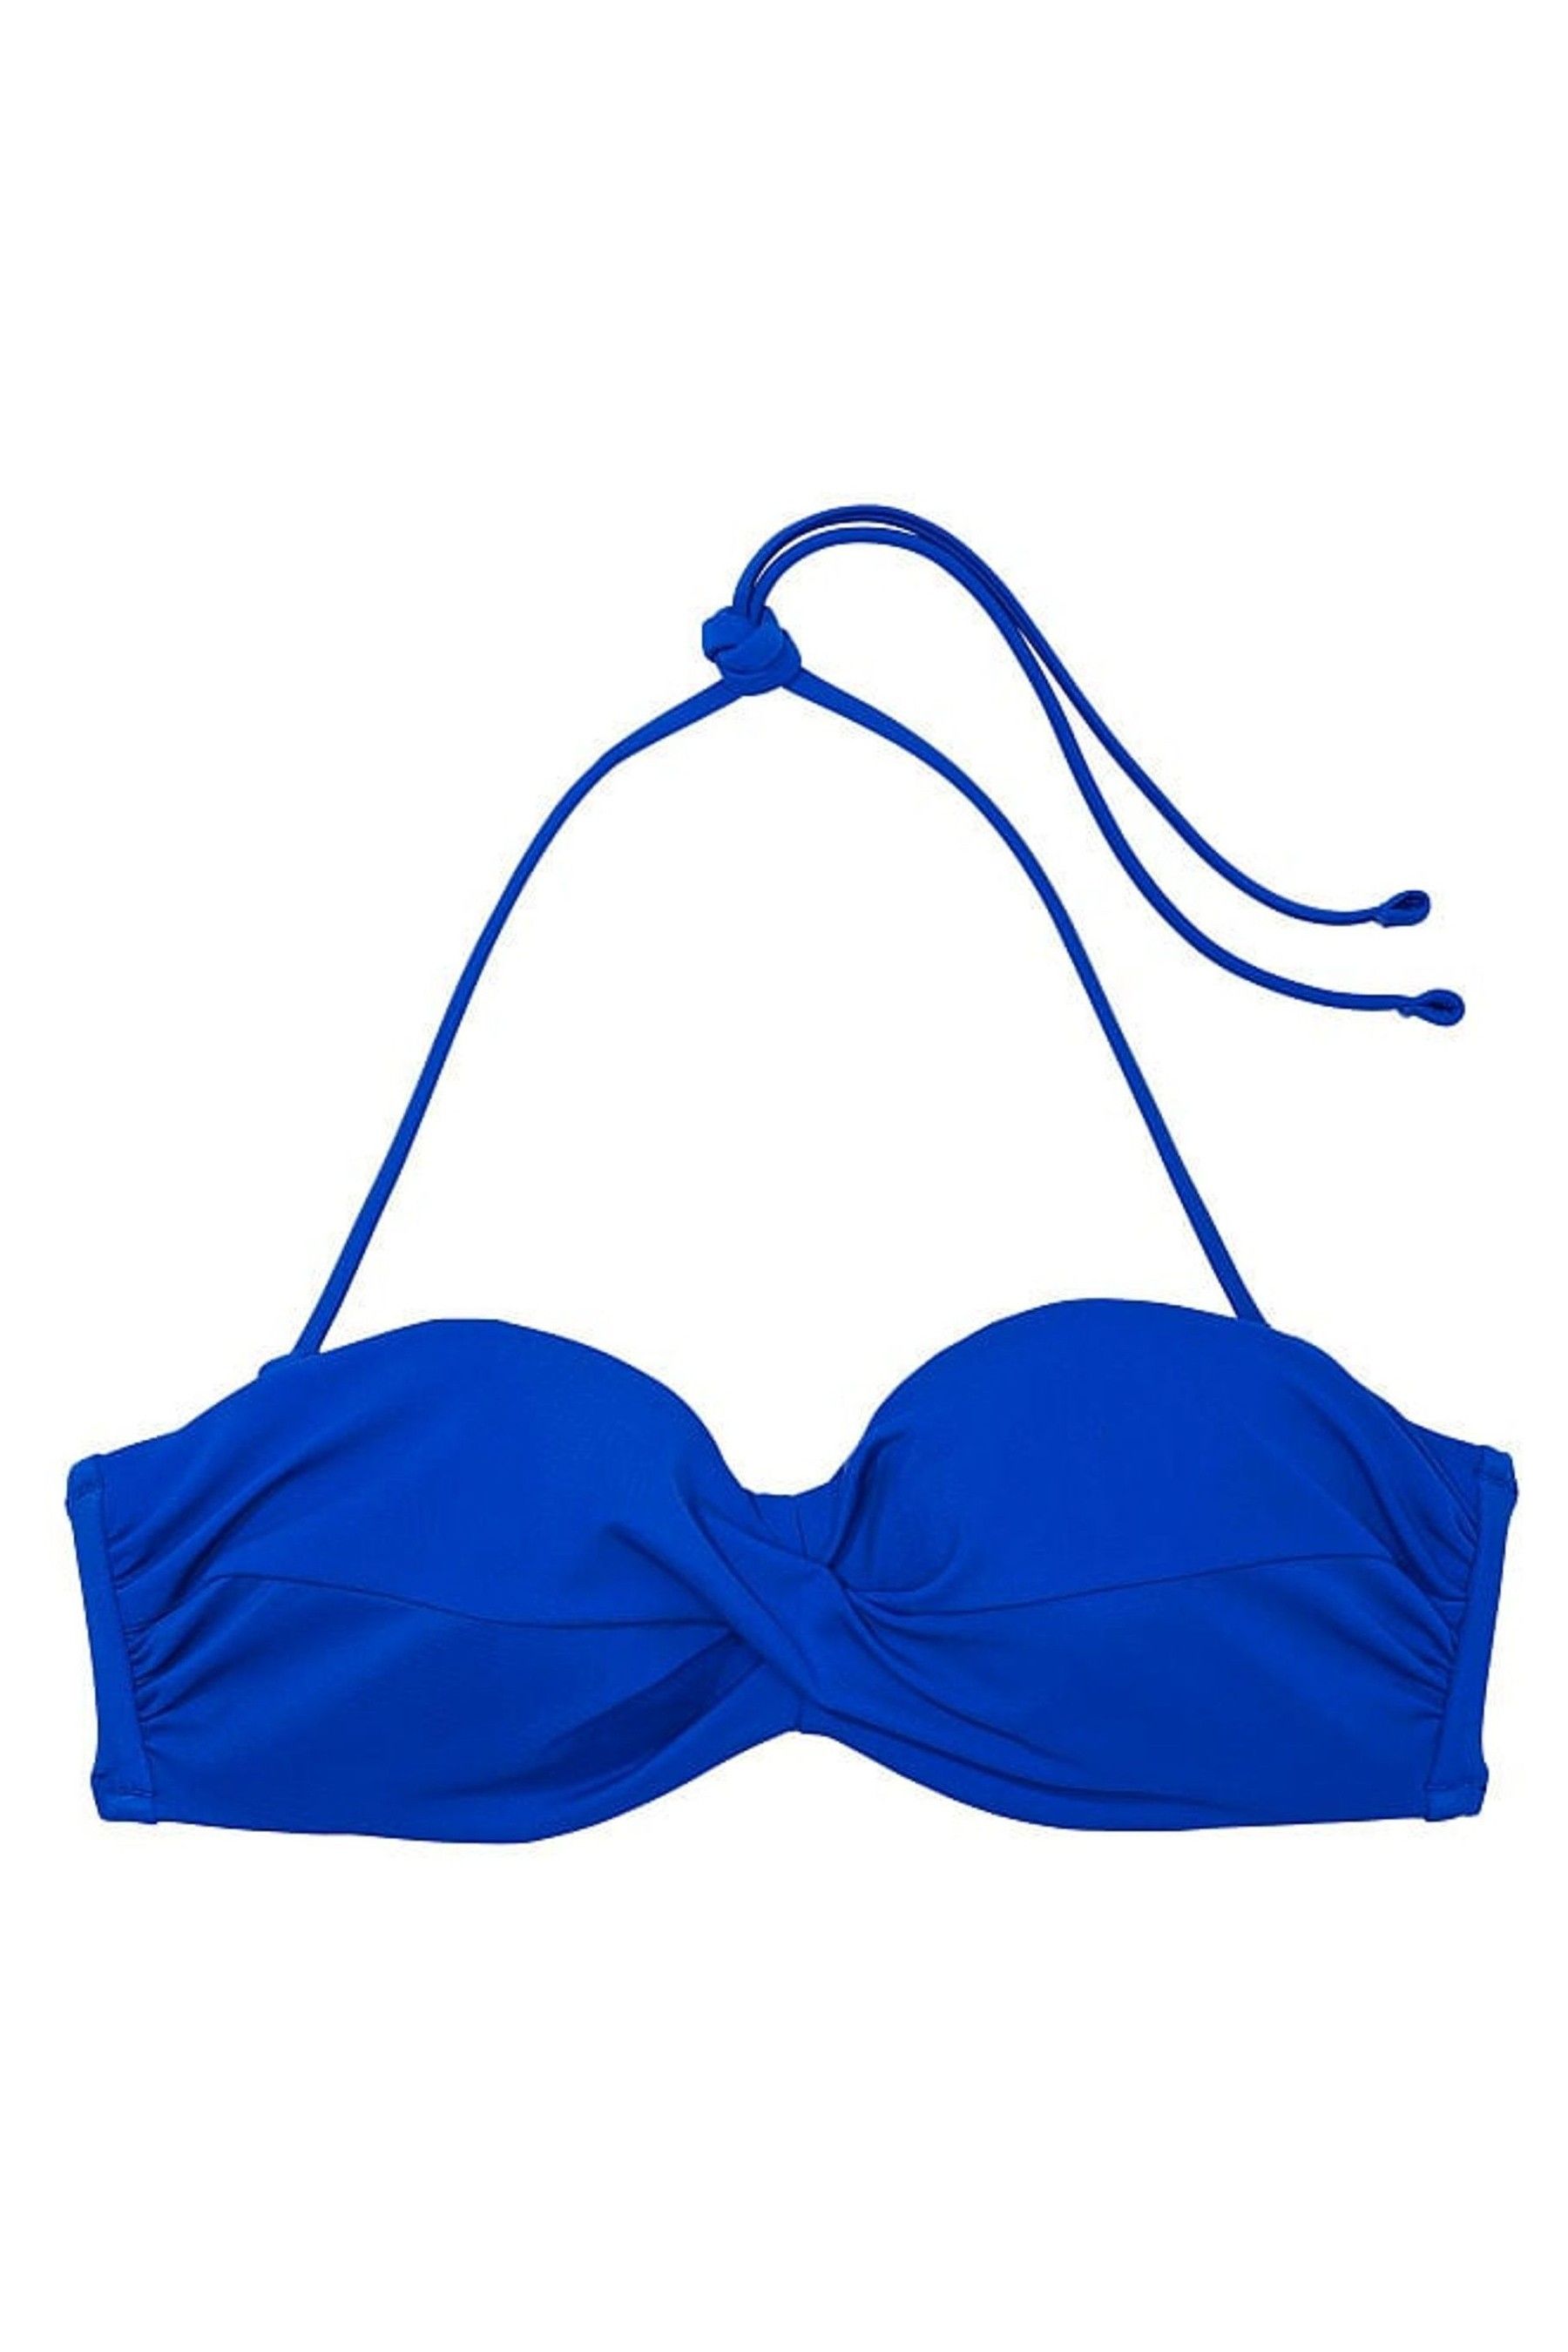 Buy Victoria's Secret Swim Bikini Top from the Victoria's Secret UK ...